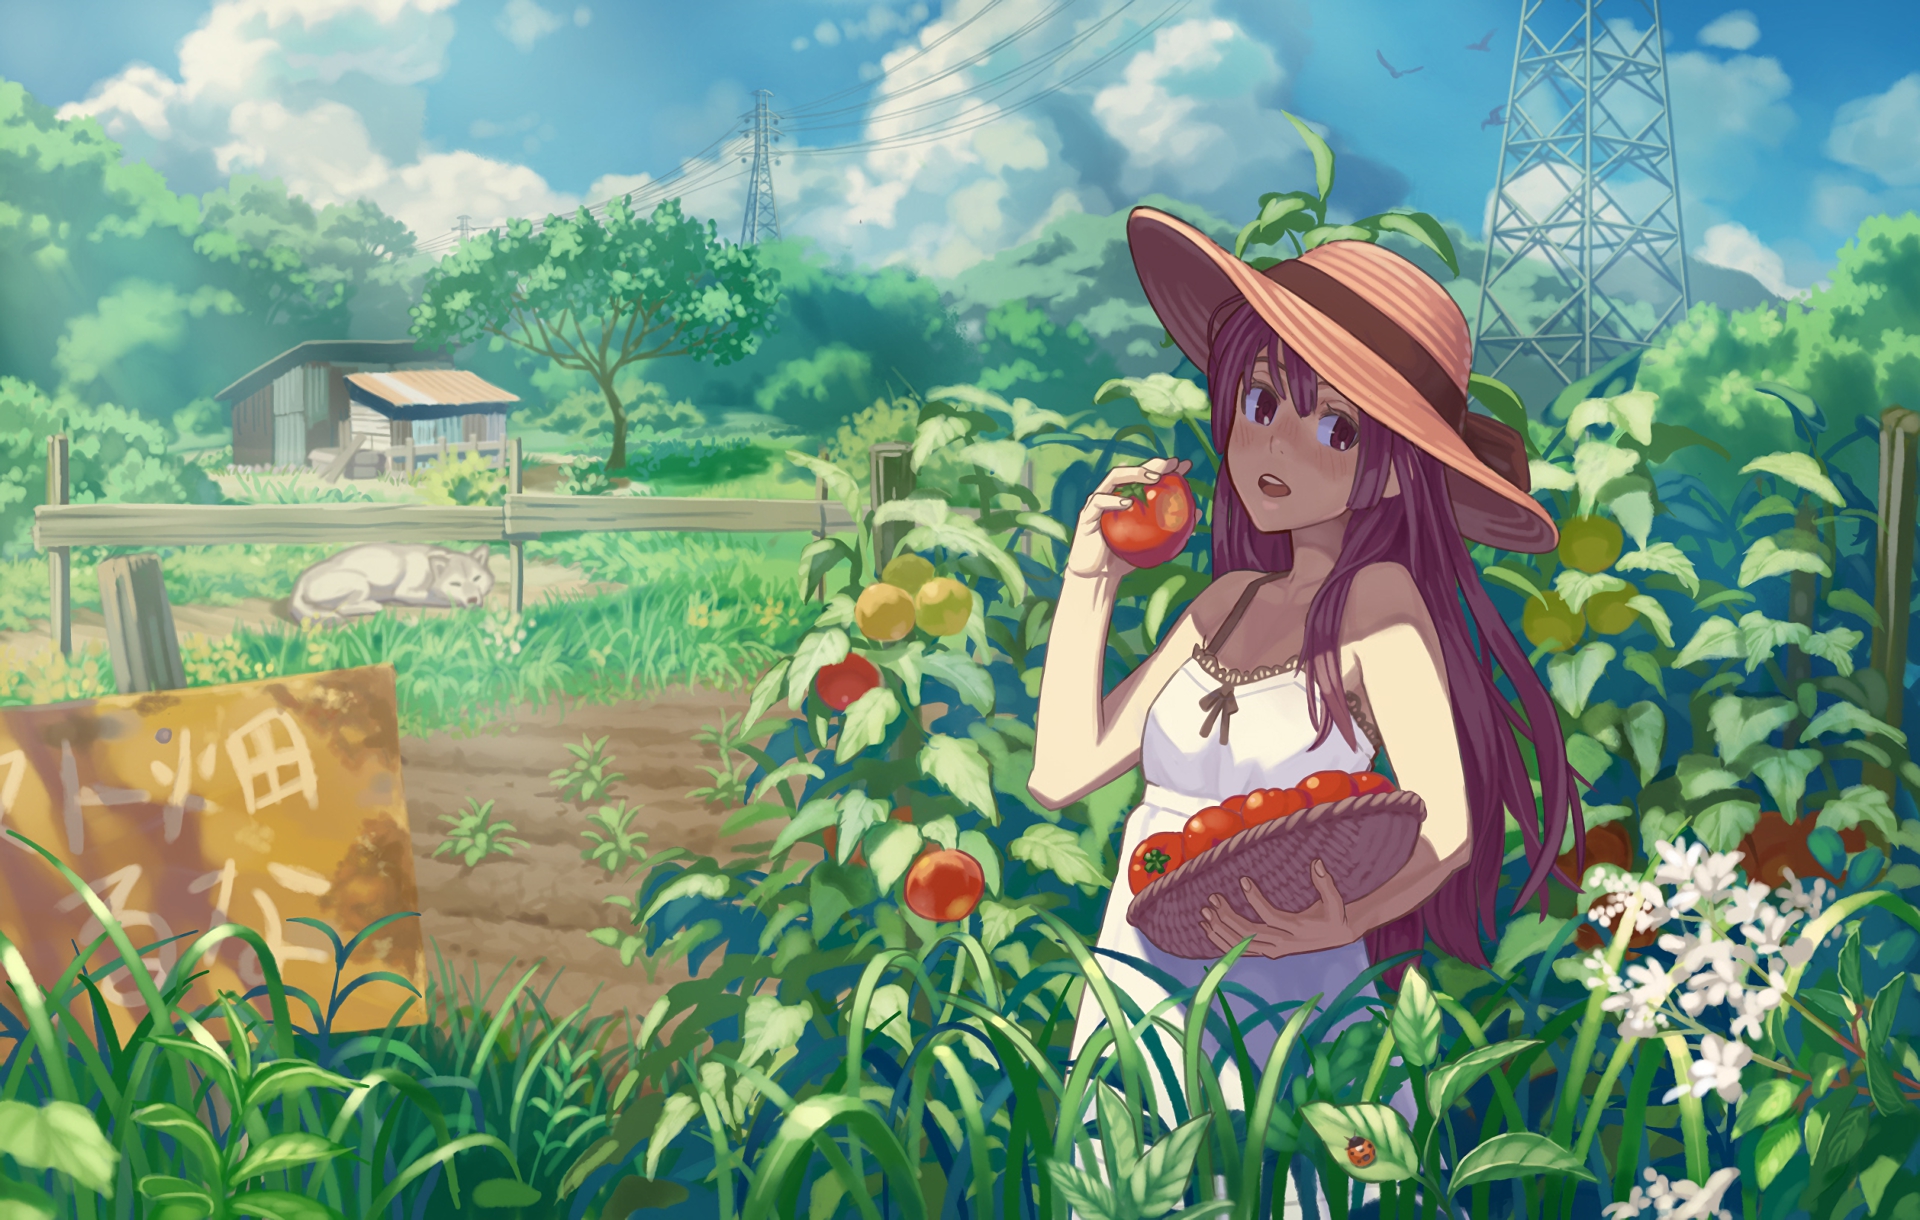 Ranch house with field and fence sunrise Studio Ghibli, Anime Key Visual,  by Makoto Shinkai, Deep Color, Intricate, 8k resolution concept ar... - AI  Generated Artwork - NightCafe Creator